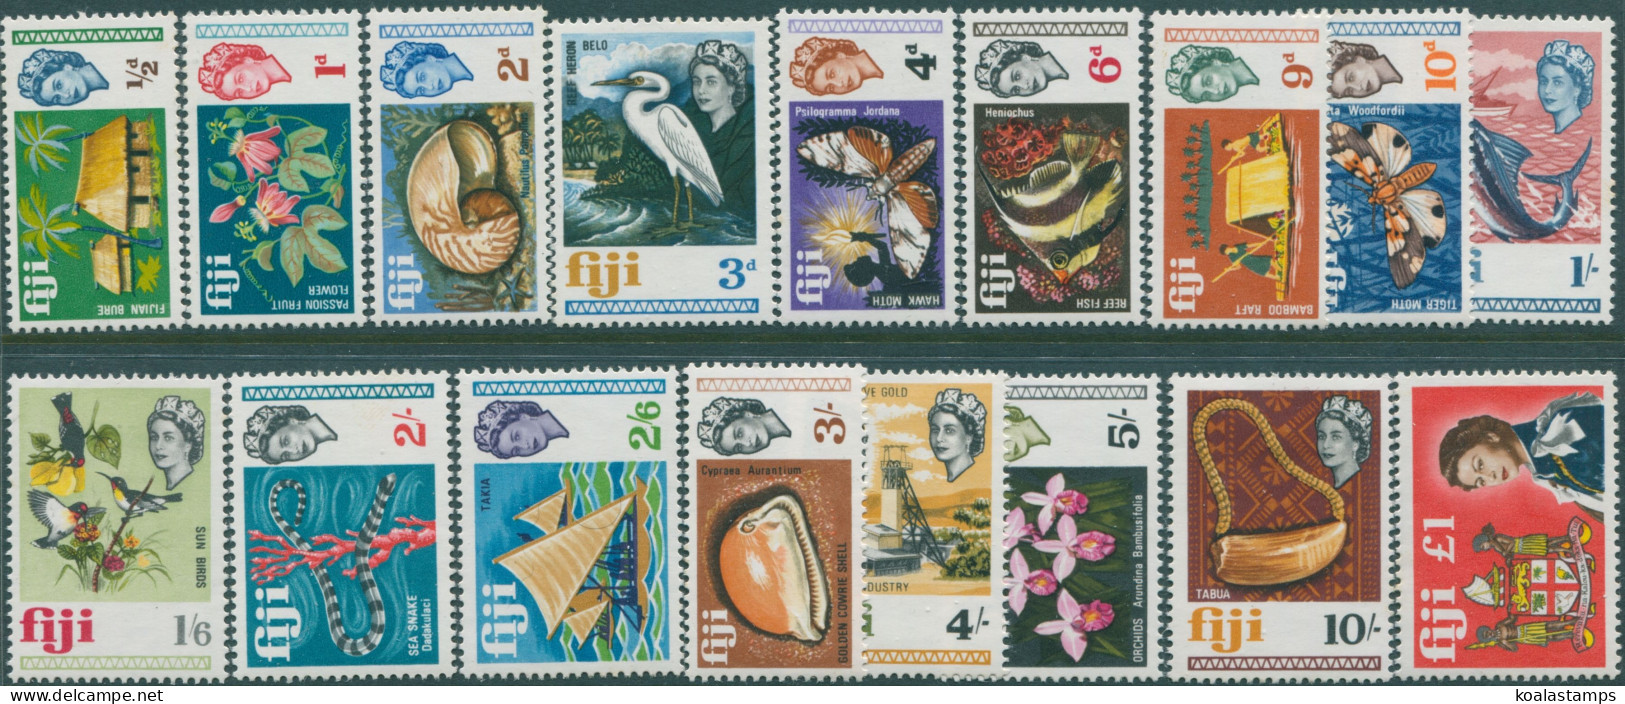 Fiji 1968 SG371-387 Definitives QEII Set MNH - Fiji (1970-...)